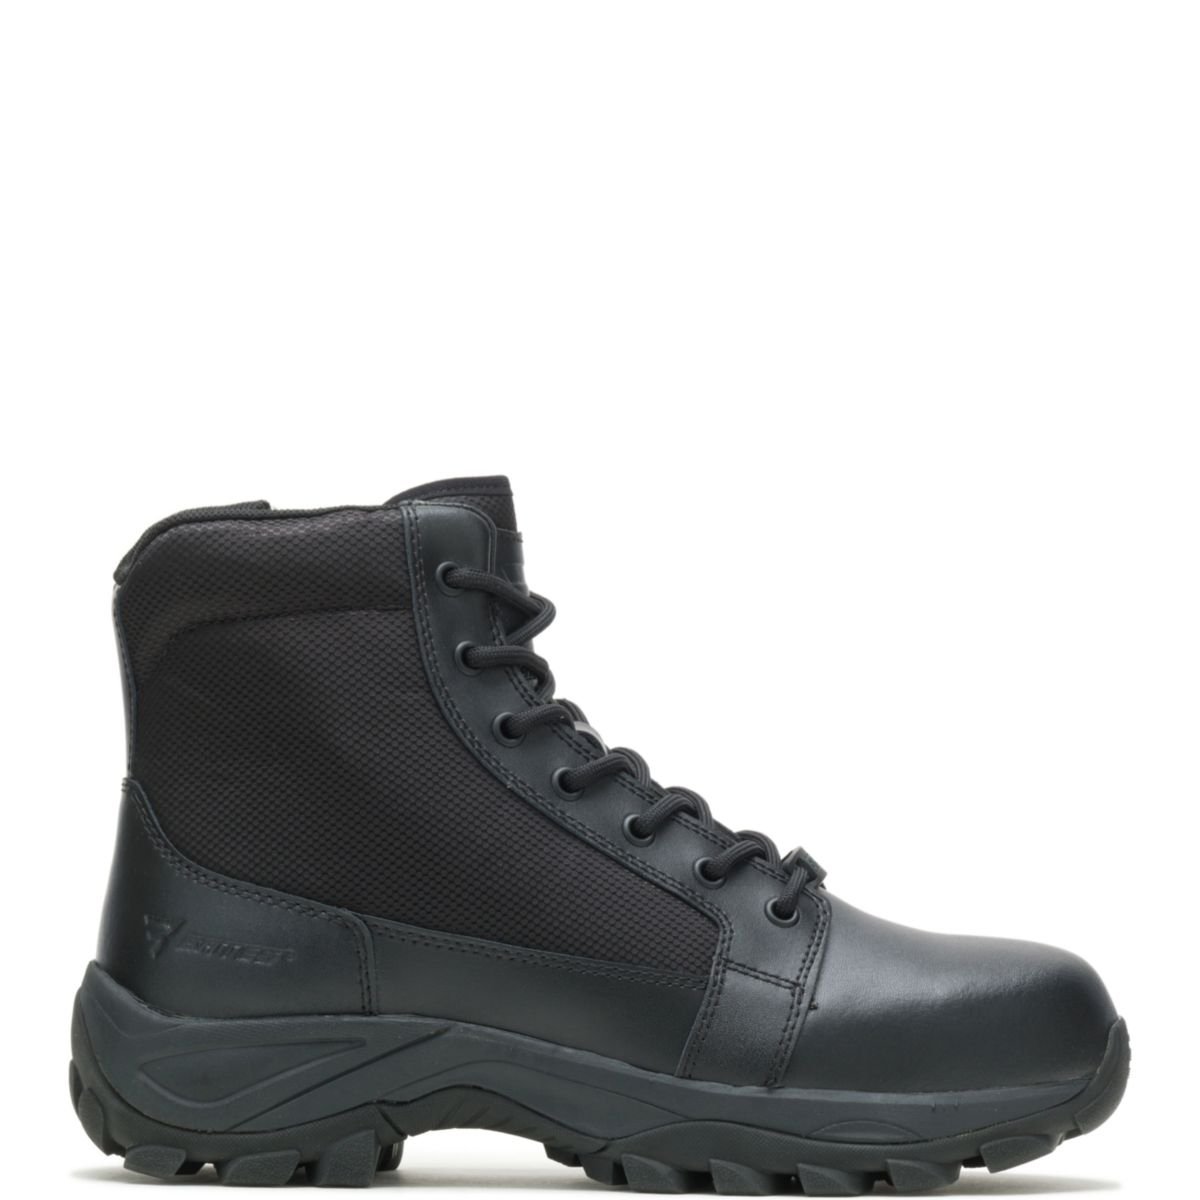 Bates Men's Fuse Zip 6-Inch Side Zip Steel Toe Work Boot Black - E06505 BLACK - BLACK, 11.5